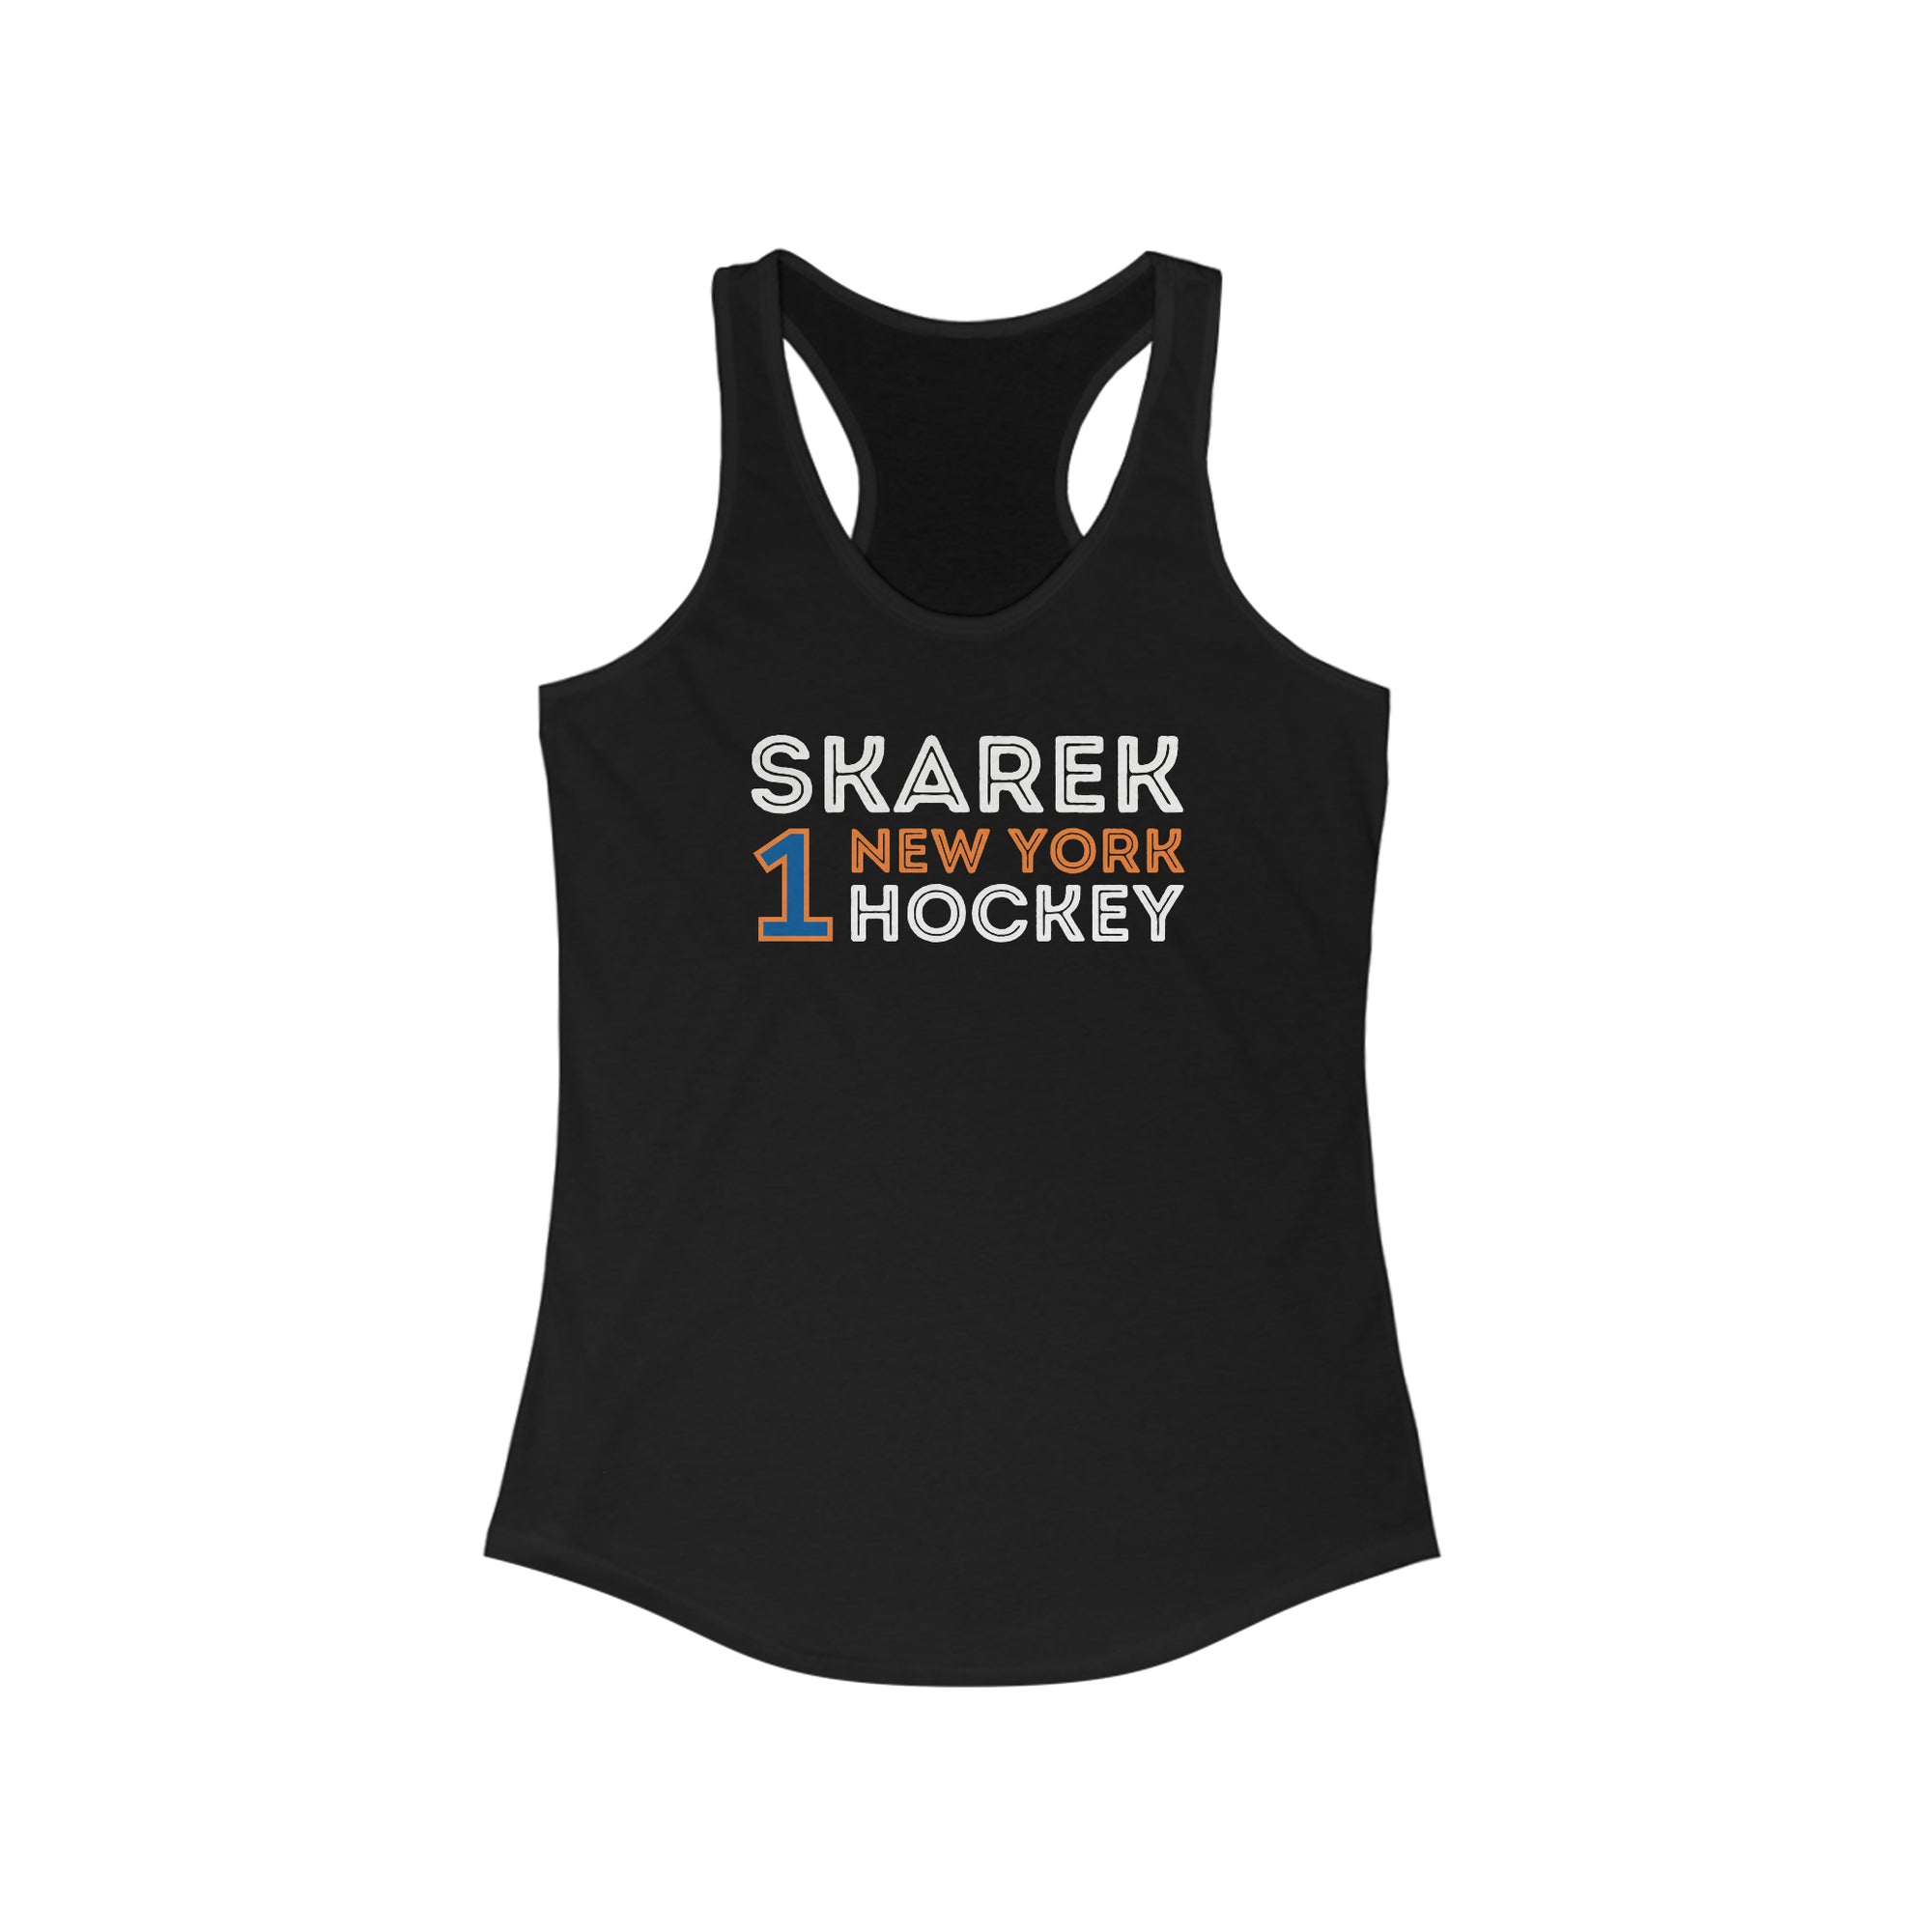 Skarek 1 New York Hockey Grafitti Wall Design Women's Ideal Racerback Tank Top